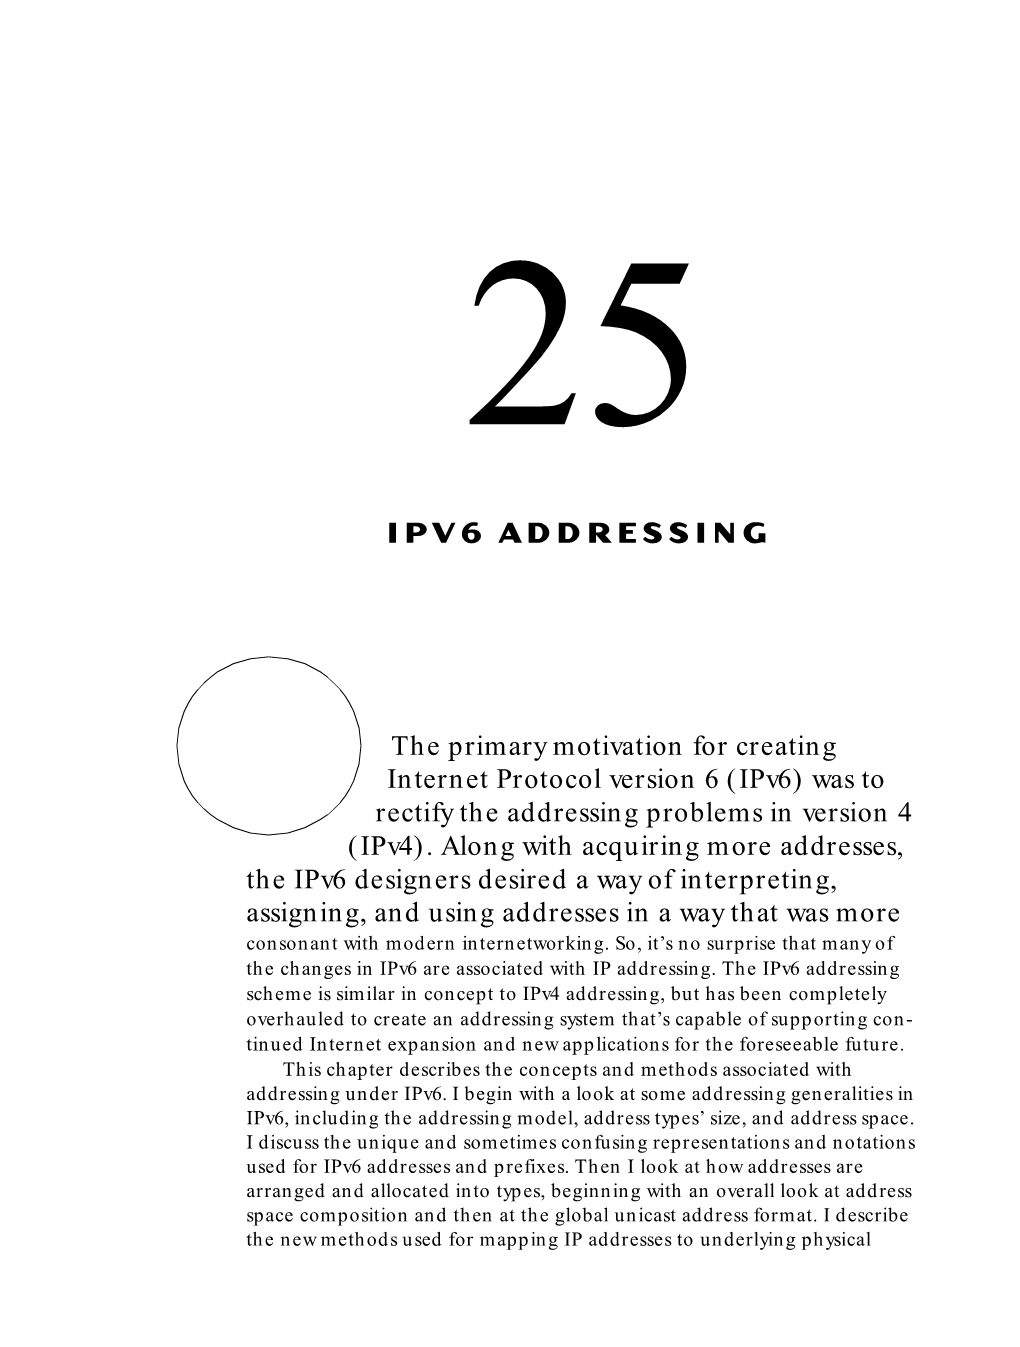 Download Chapter 25: IPV6 Addressing